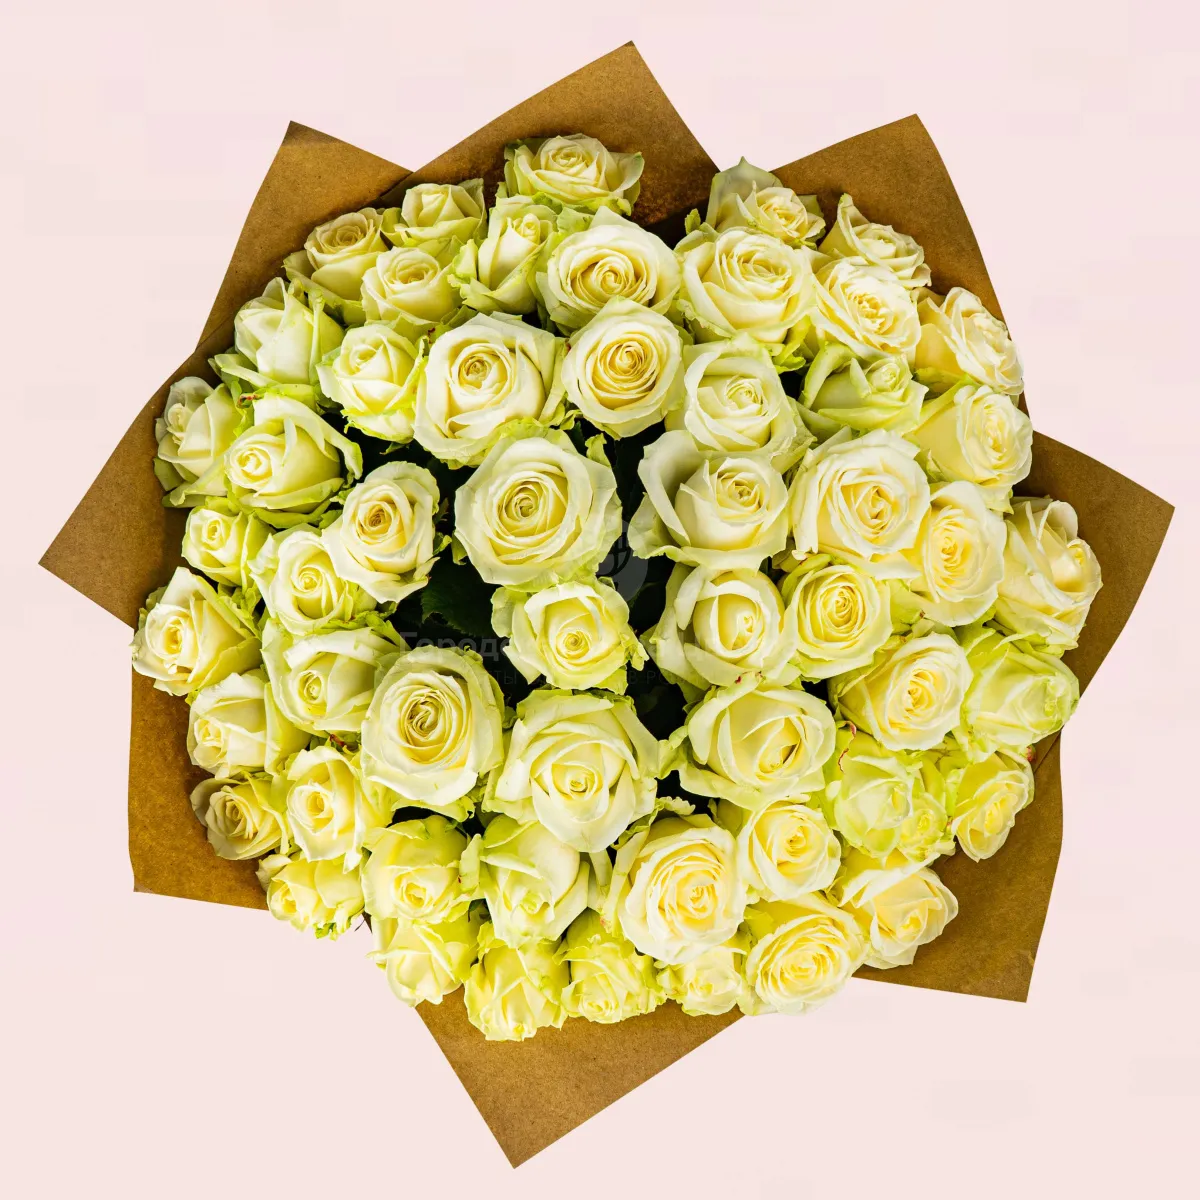 31 бело-зеленая роза (60 см)